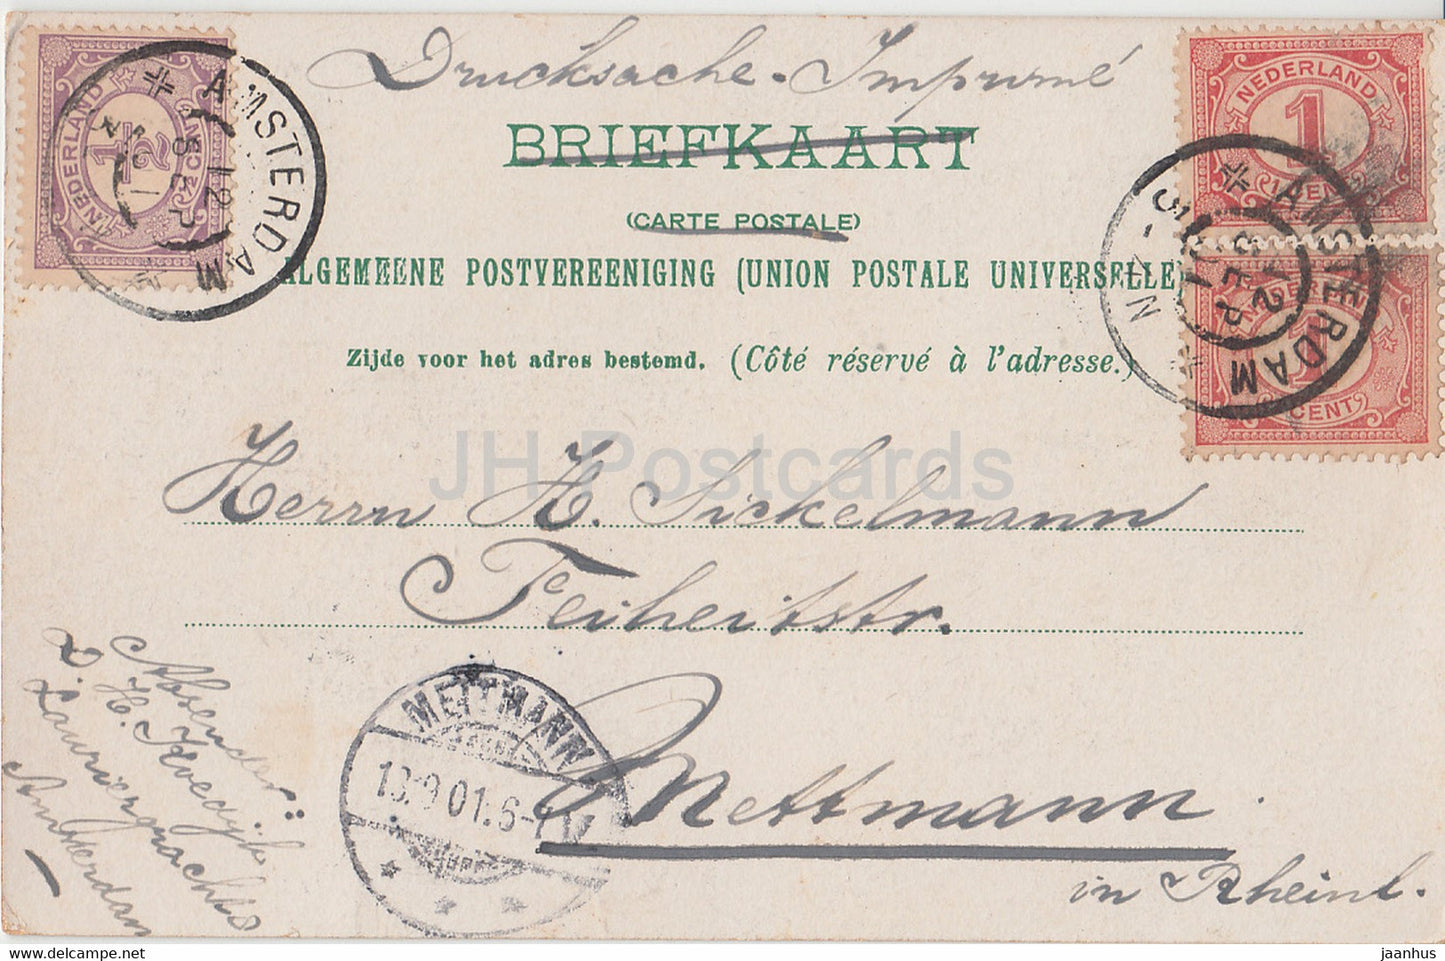 Amsterdam - Het Centraal Station - railway station - old postcard - 1901 - Netherlands - used